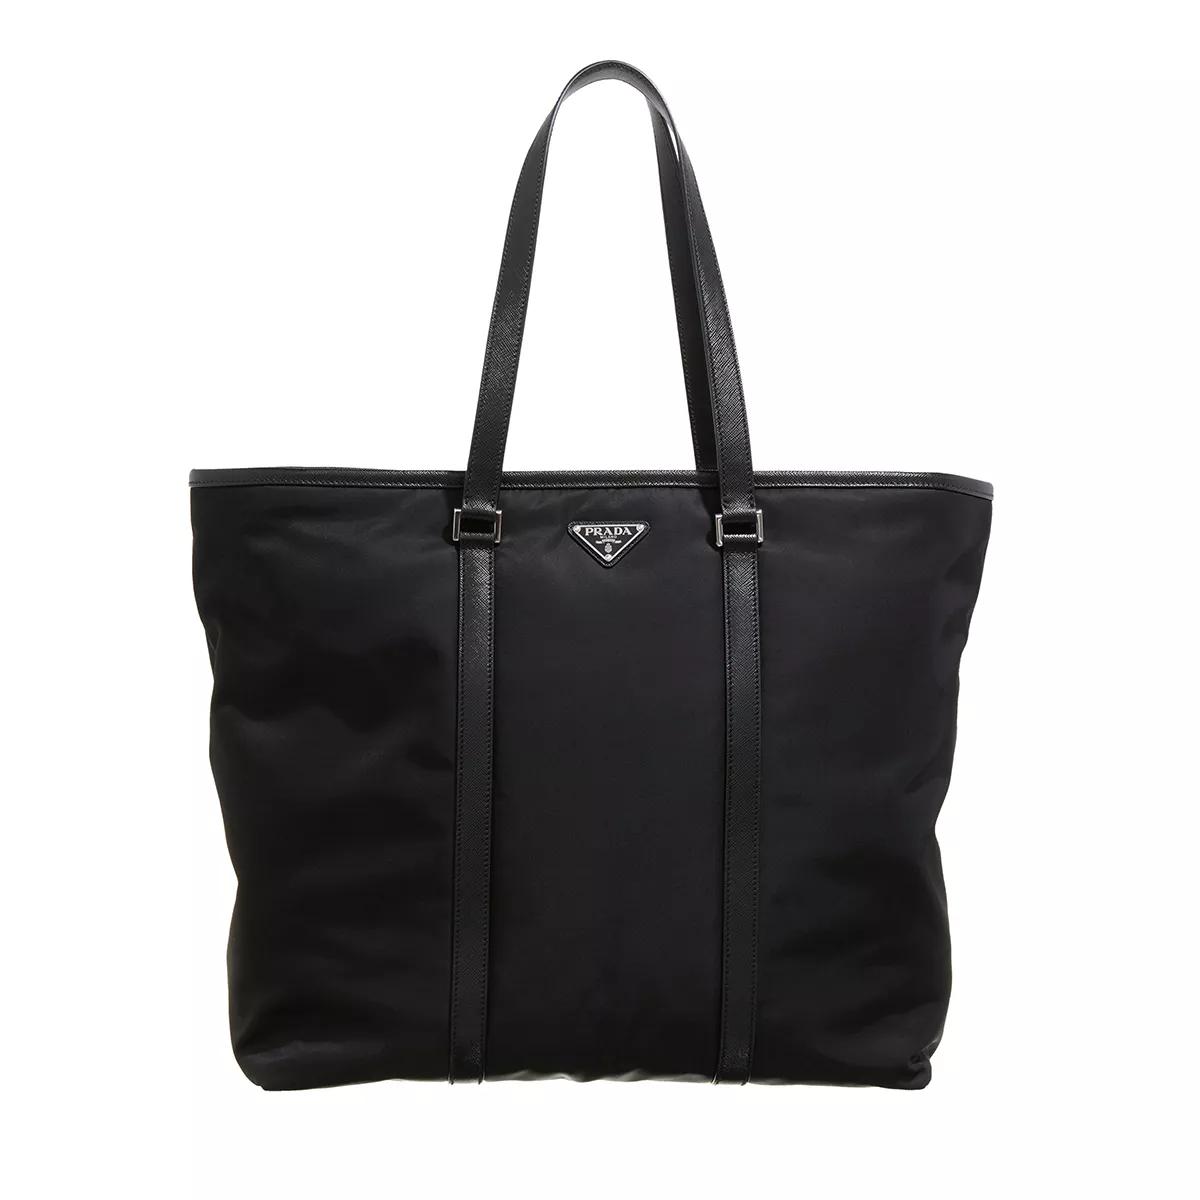 Prada Re-Nylon and Leather Tote Bag - Black - One Size